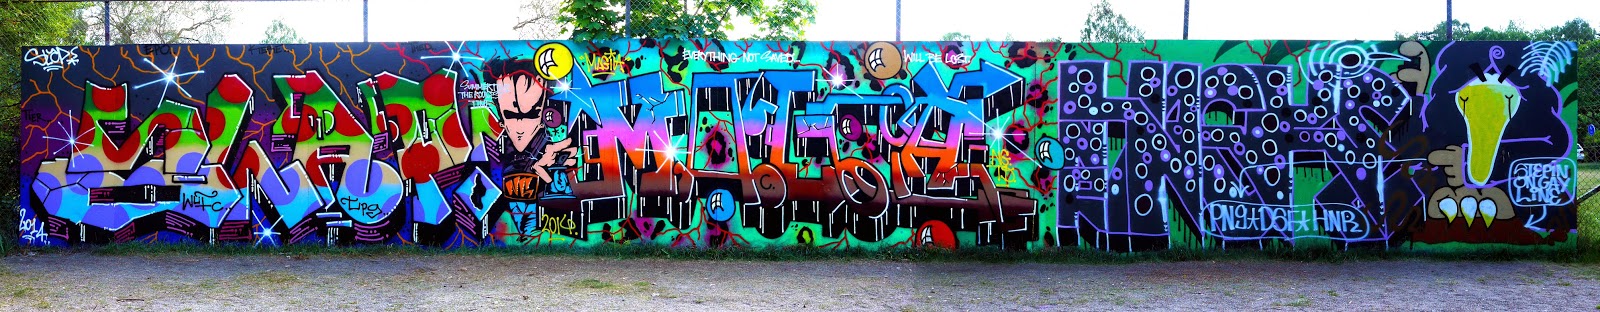 Sweden By Pike Graffiti